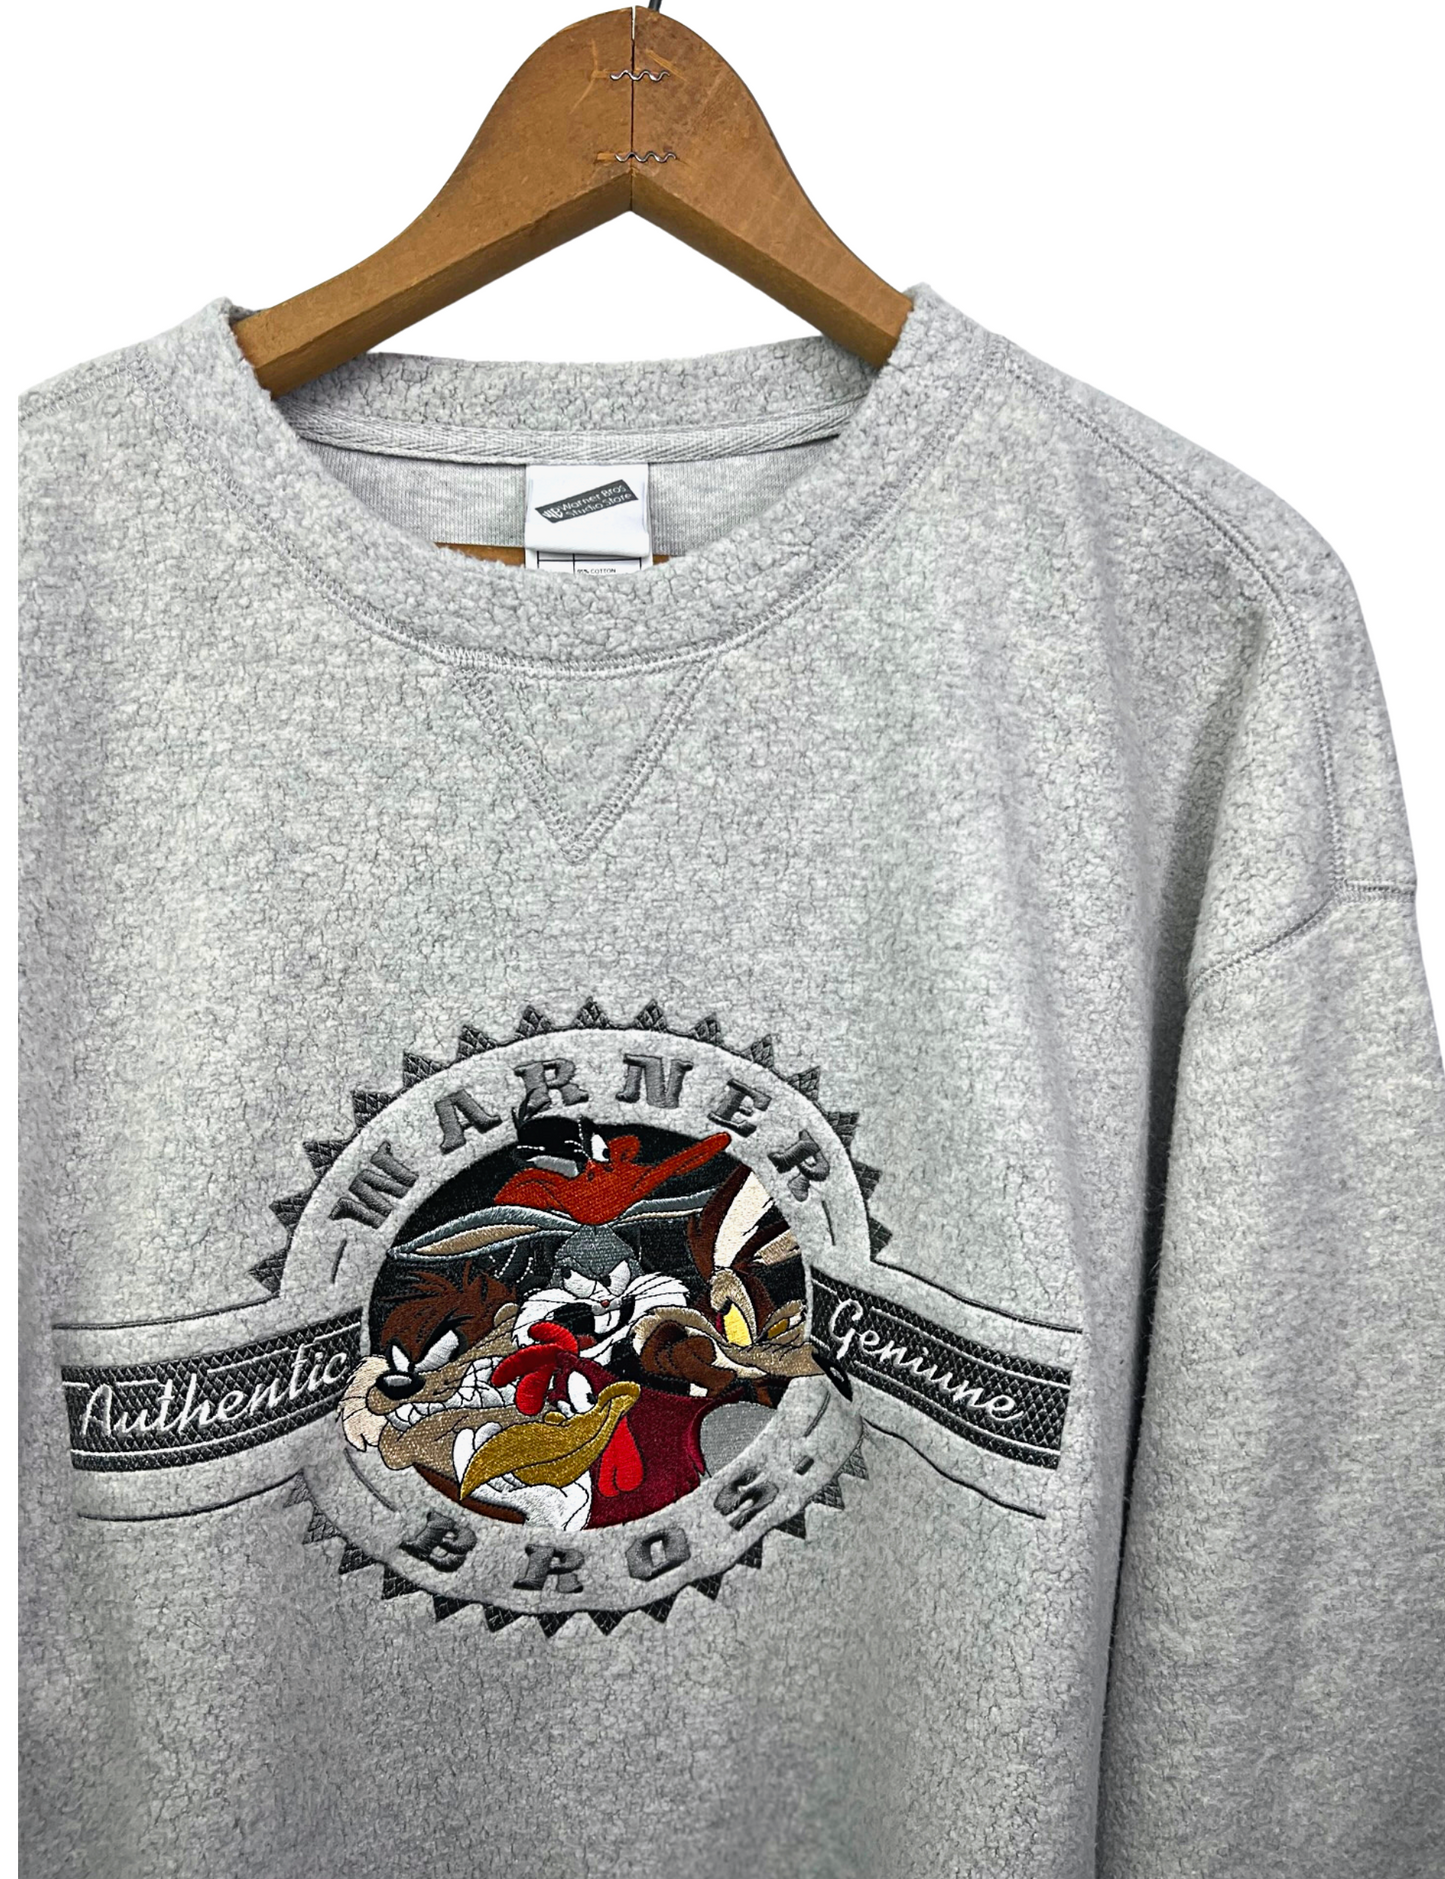 2000 Y2K Looney Tunes Warner Bros Embroidered Fleece Pullover Sweatshirt Size X-Large